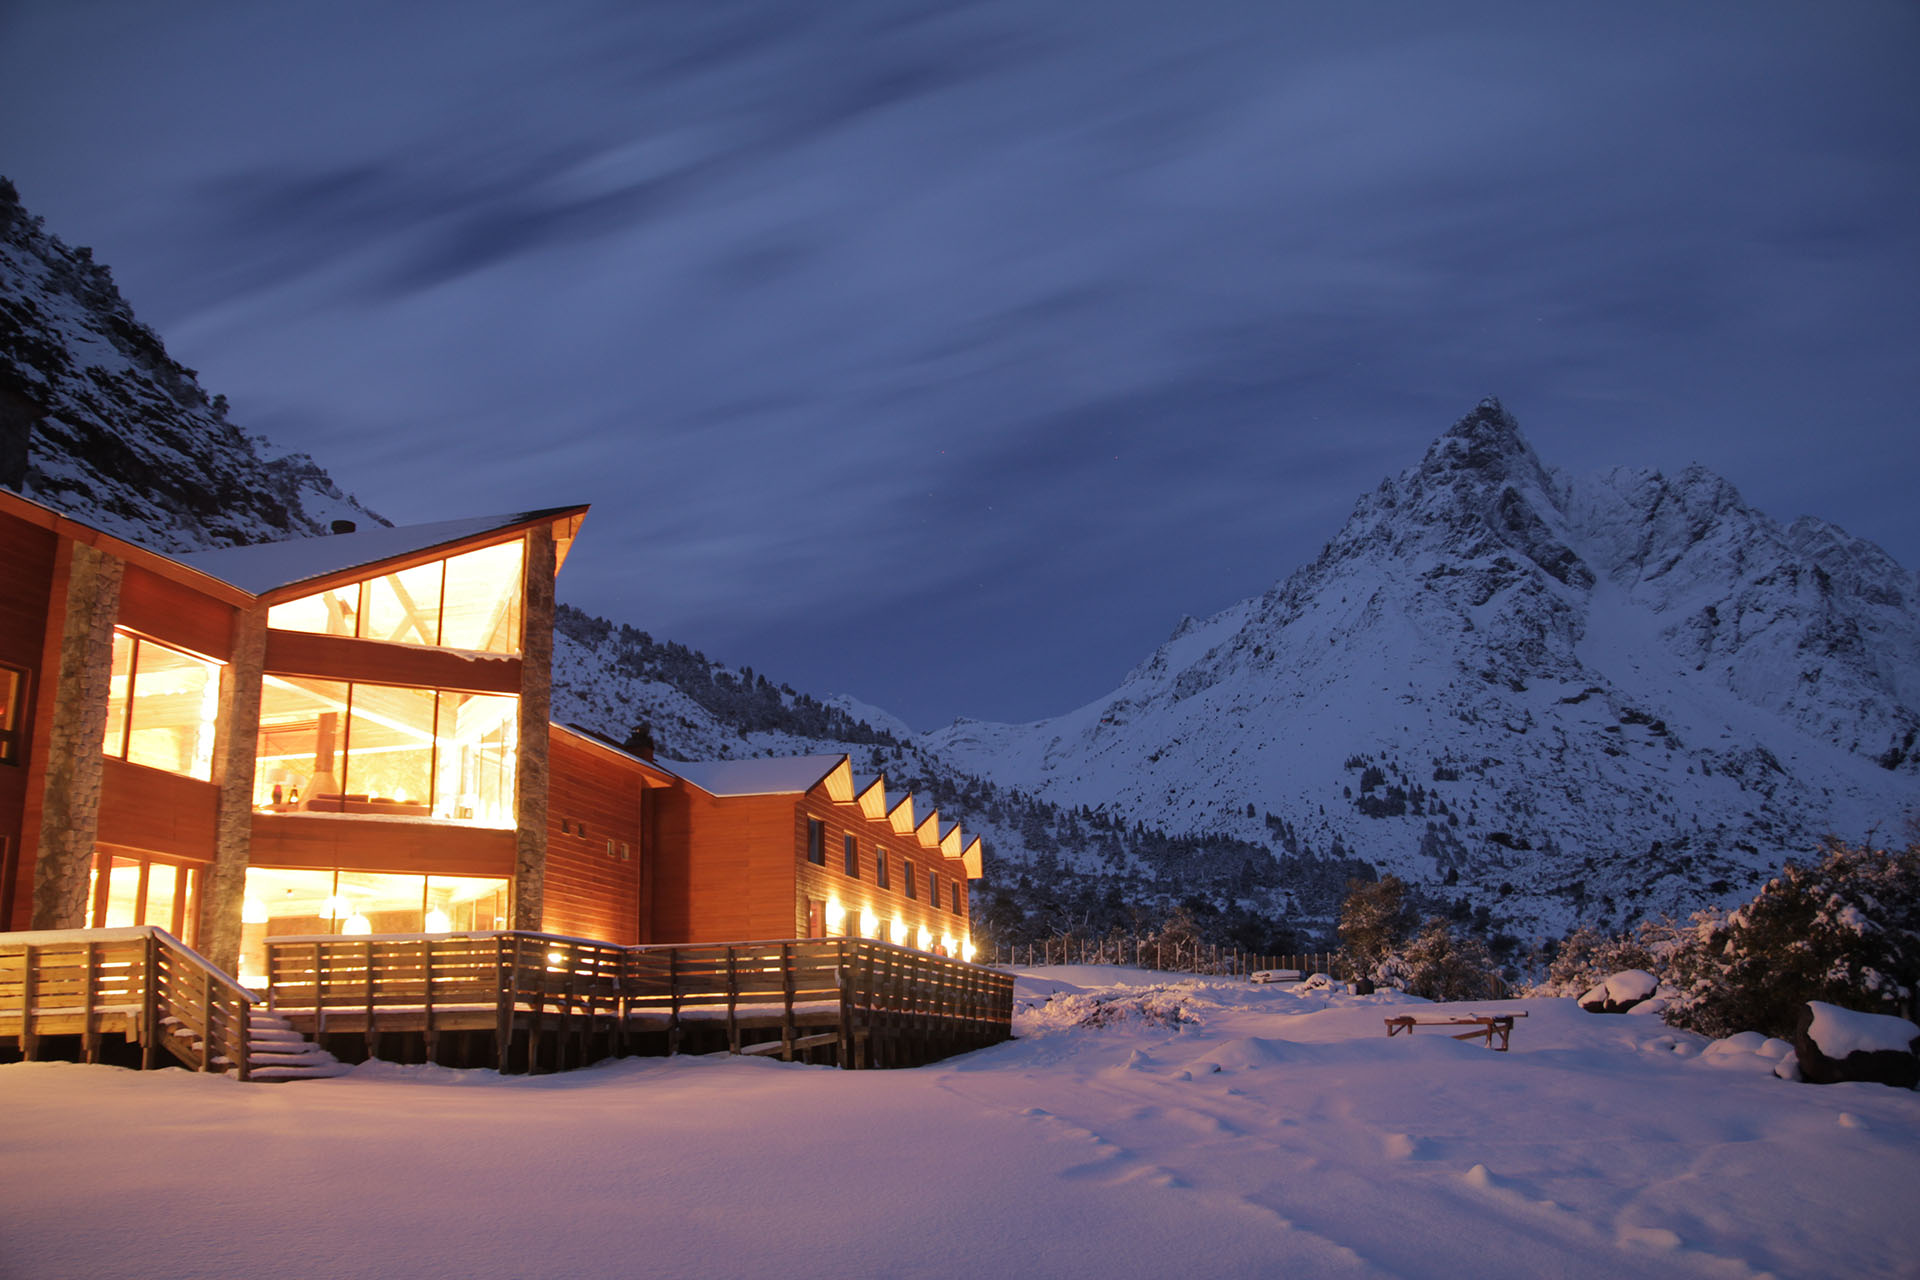 Puma Lodge night in snow